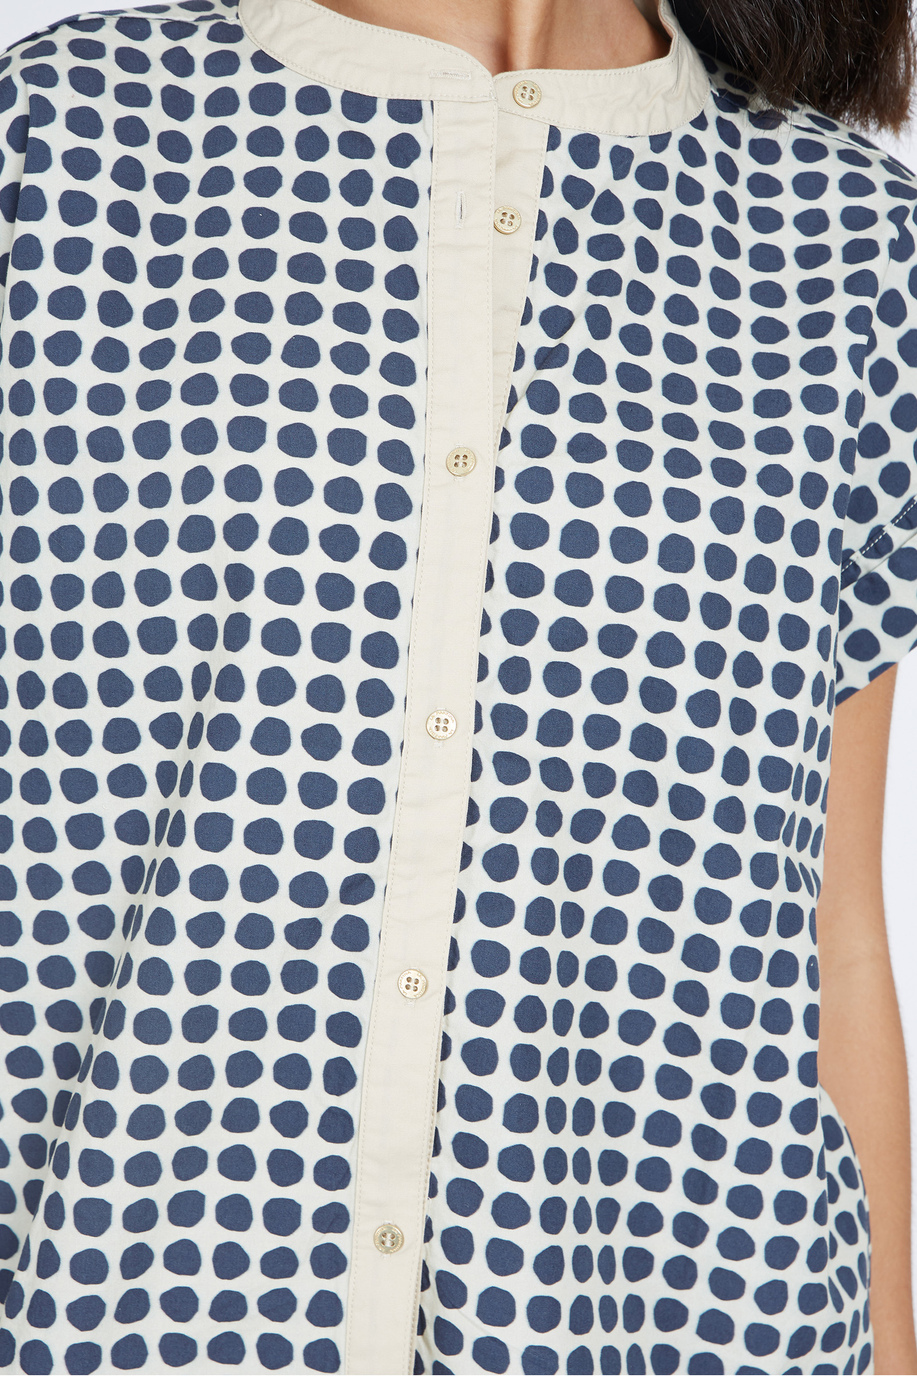 Damen-Hemd mit Punkten und normaler Passform- Vanda - Hemden | La Martina - Official Online Shop